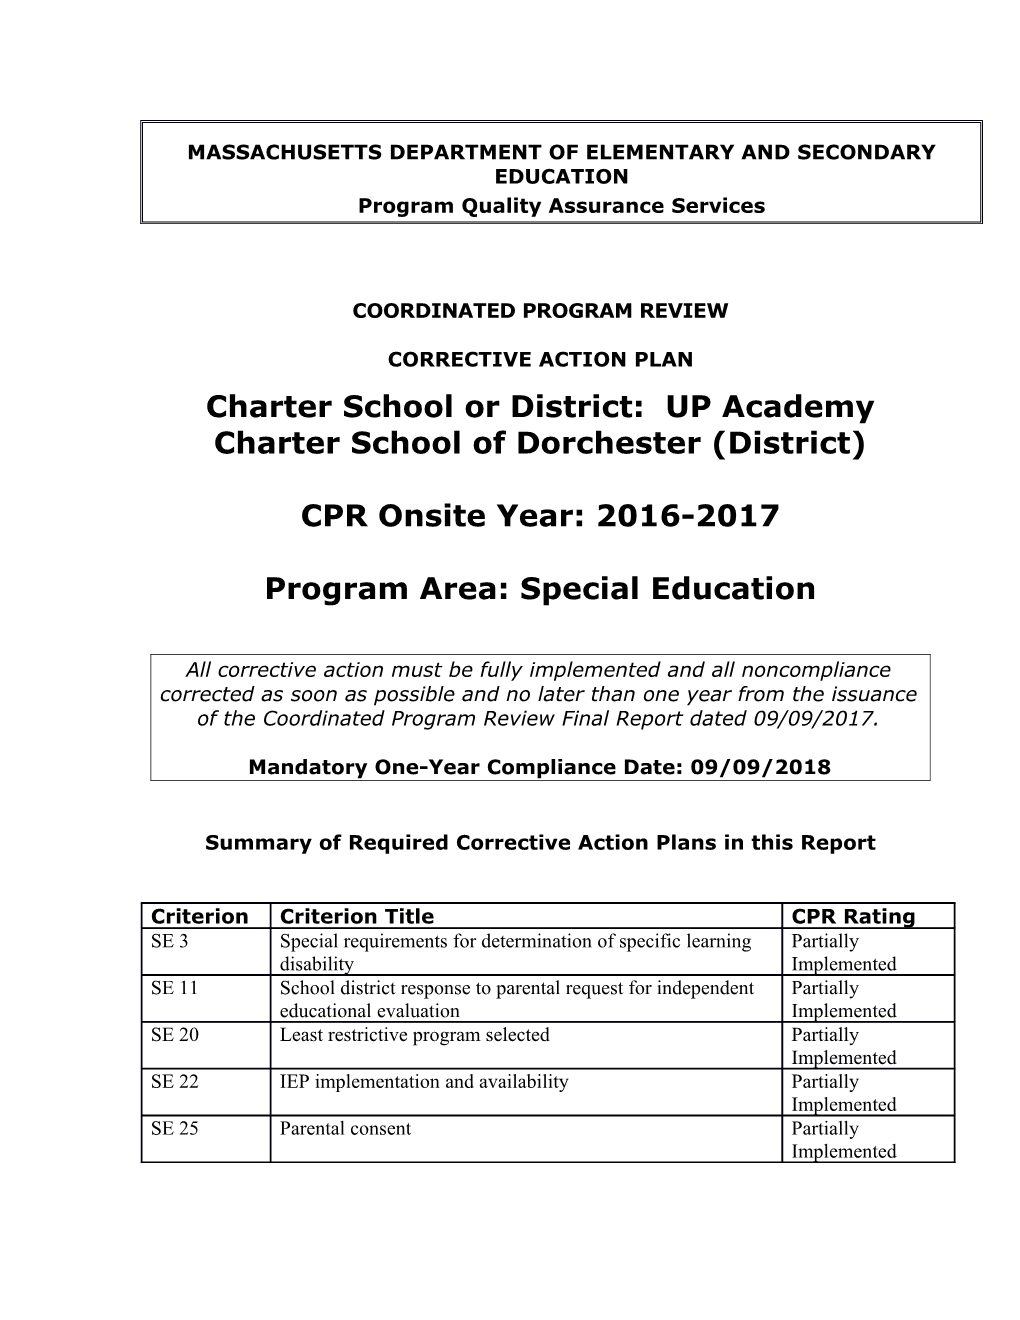 UP Academy Charter School of Dorchester CAP 2017